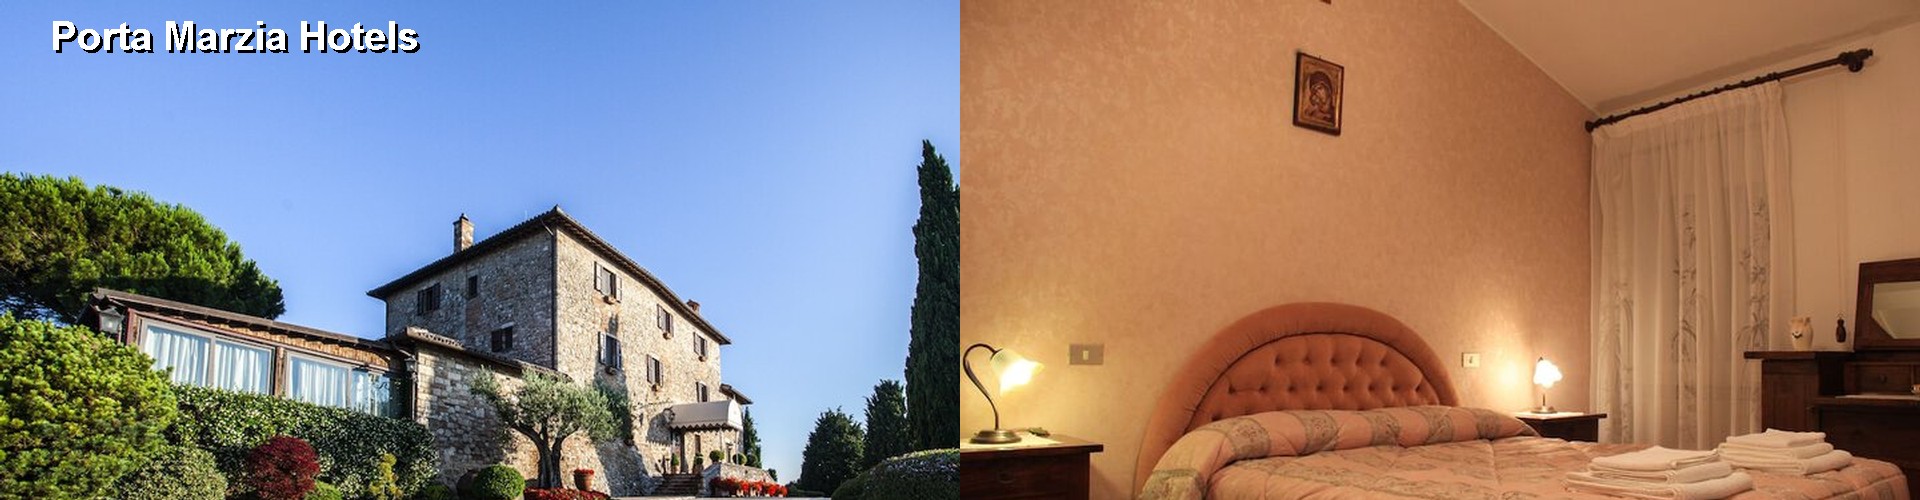 5 Best Hotels near Porta Marzia